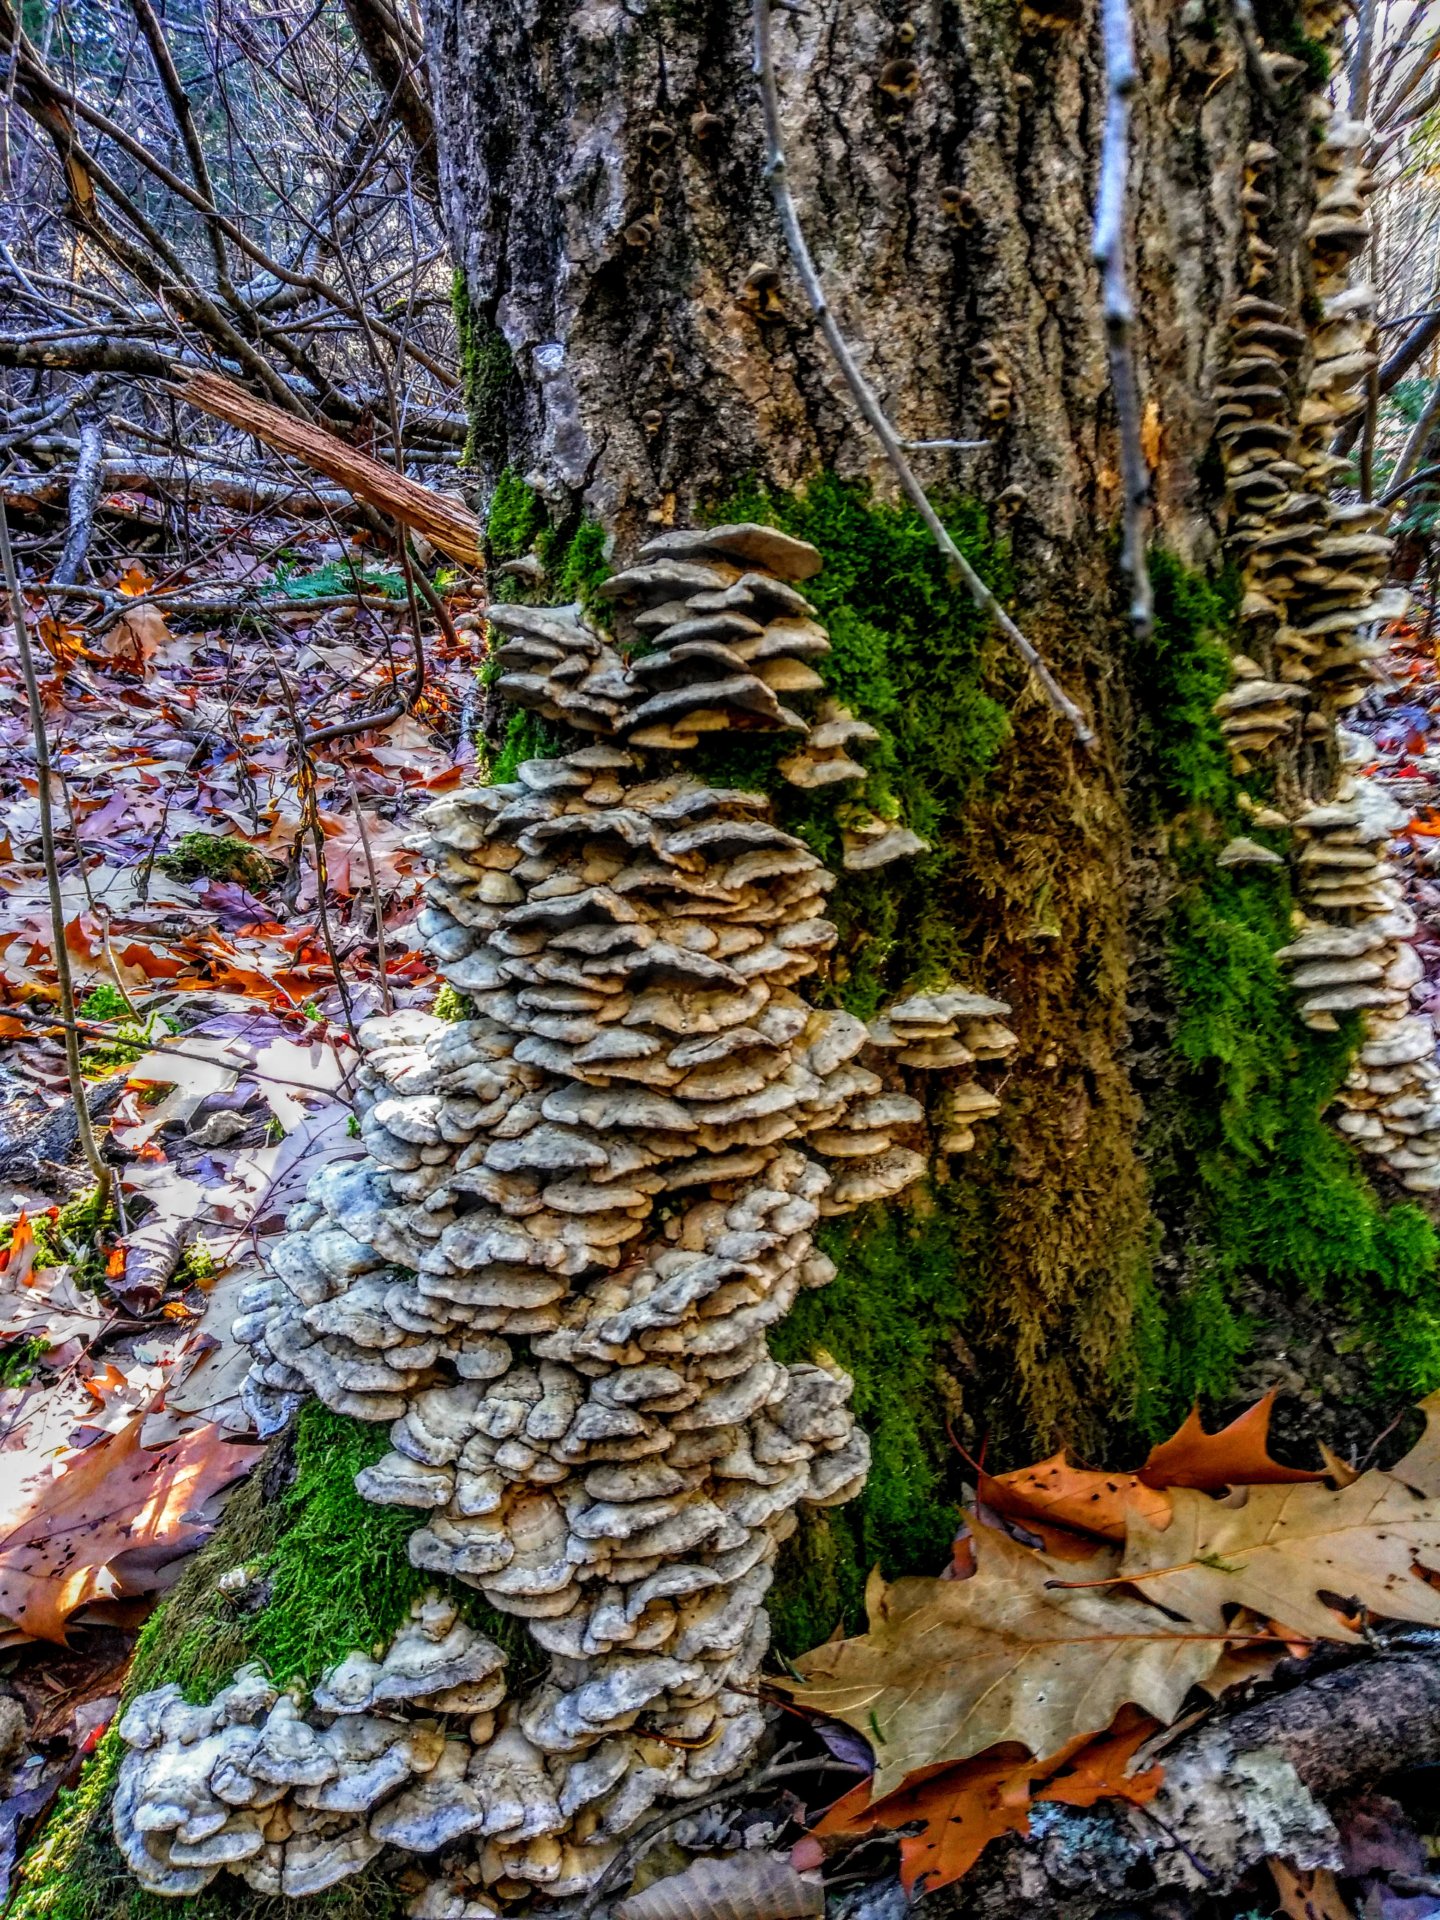 Mushrooms on a tree, in Downeast, Maine. Nov, 11/2018